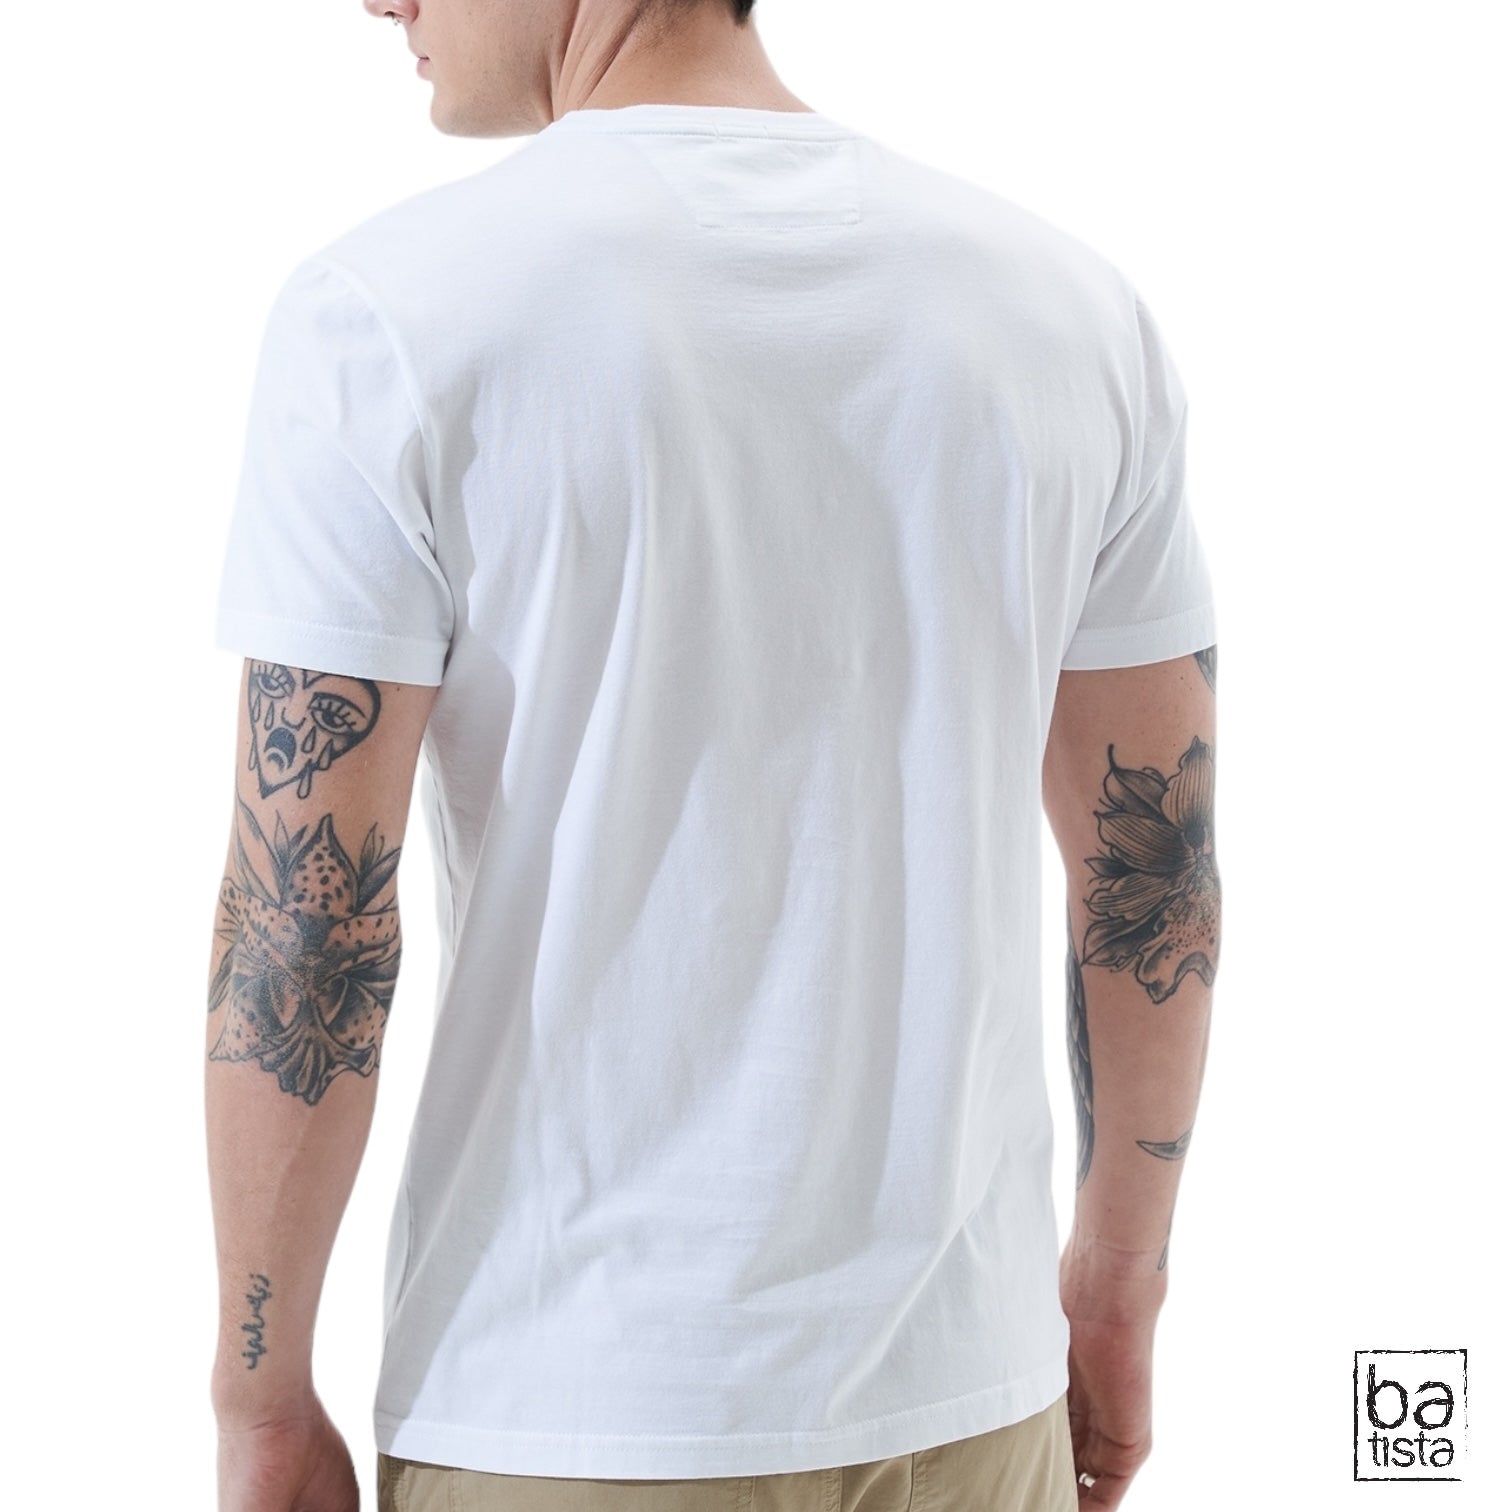 Camiseta Americanino 841F002 Blanco